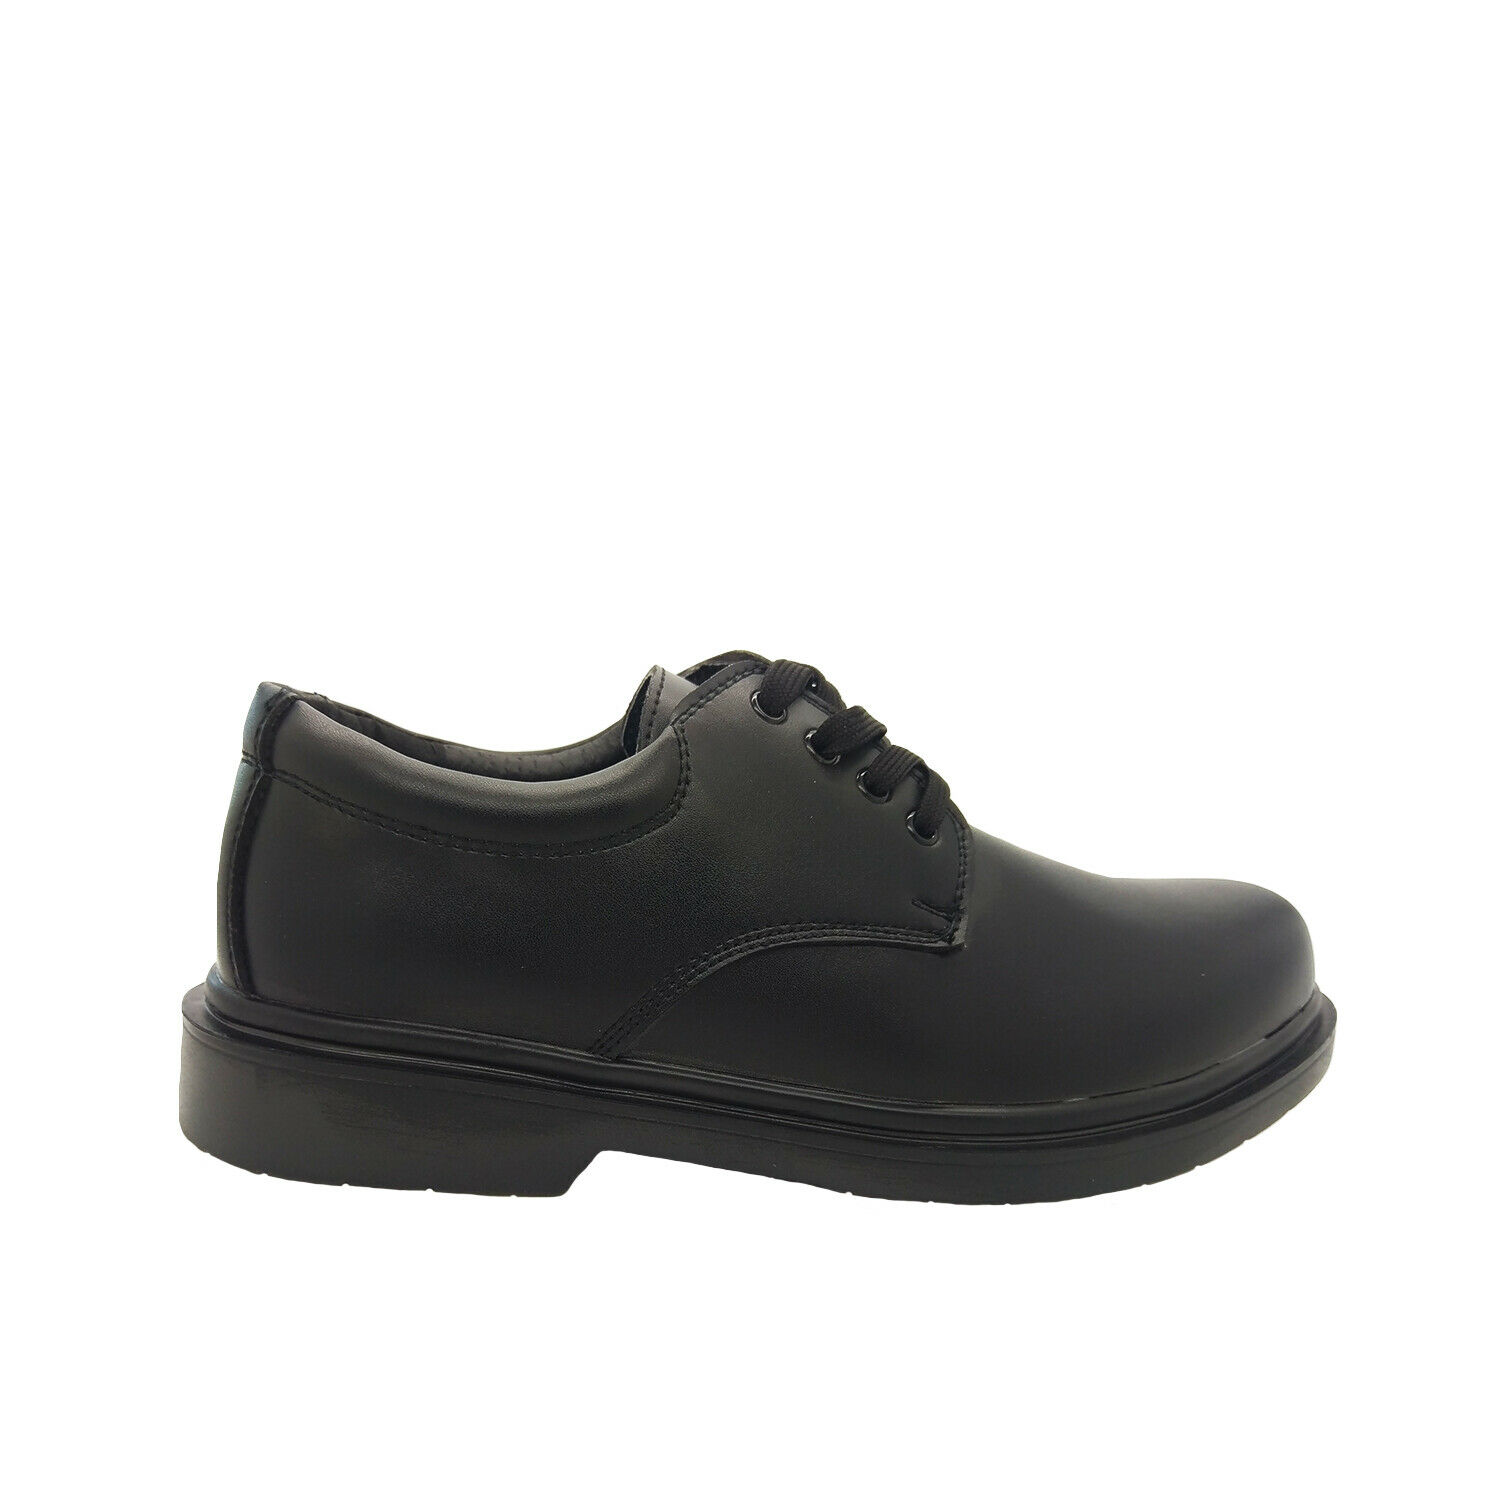 Boys Shoes Grosby Hamburg Jnr Black Boys/Youth Leather School Shoe Size ...